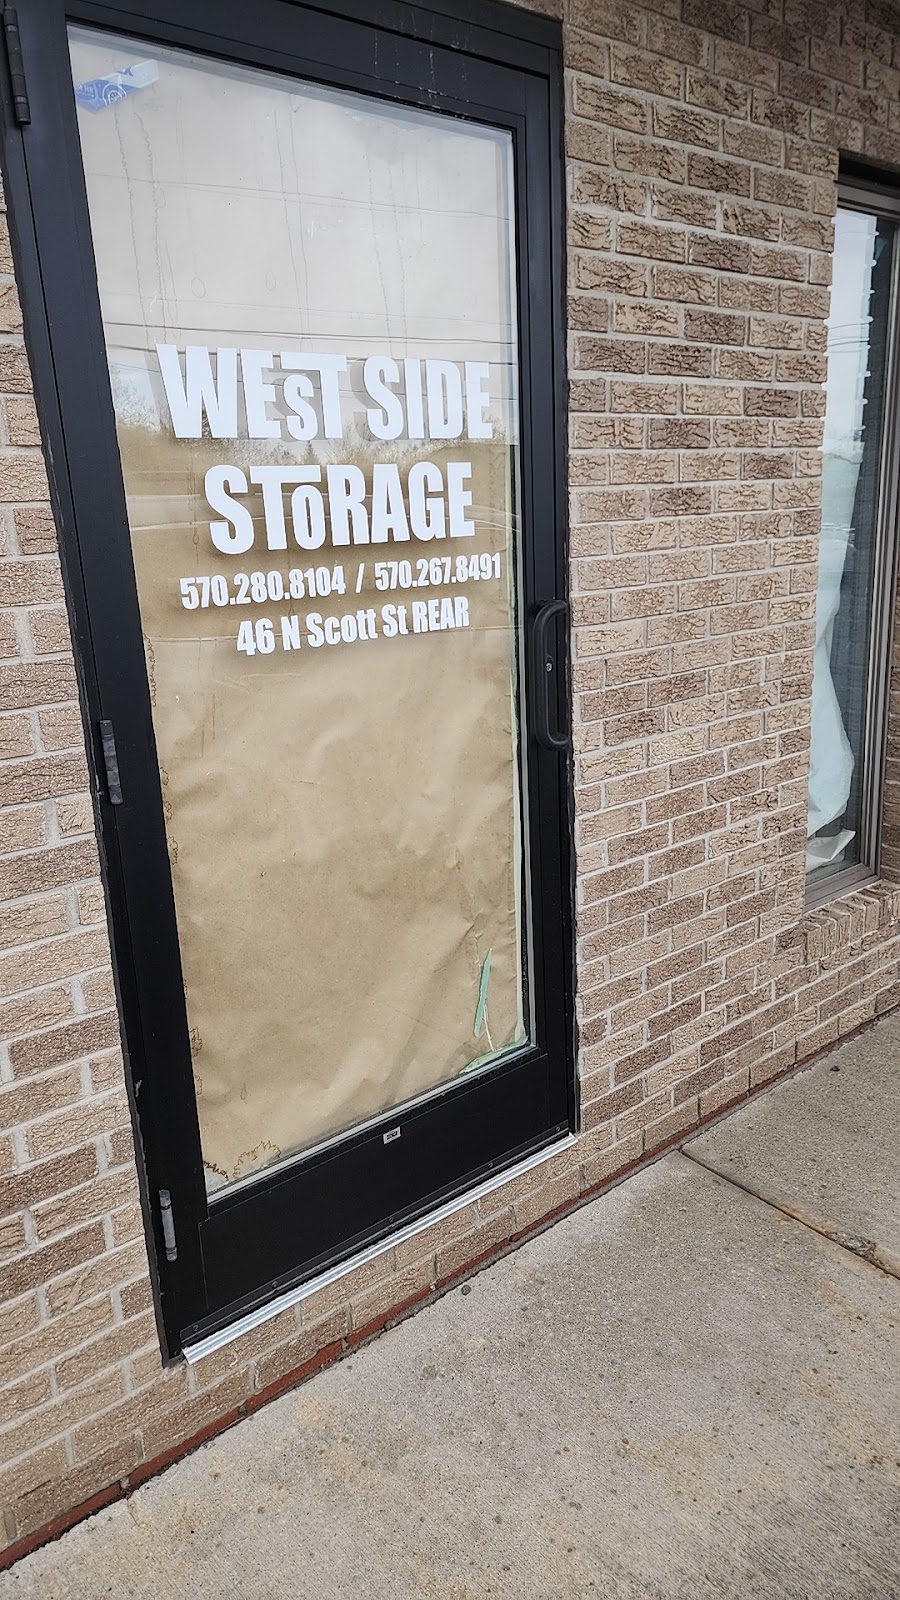 West Side Storage | 46 N Scott St REAR, Carbondale, PA 18407 | Phone: (570) 267-8491